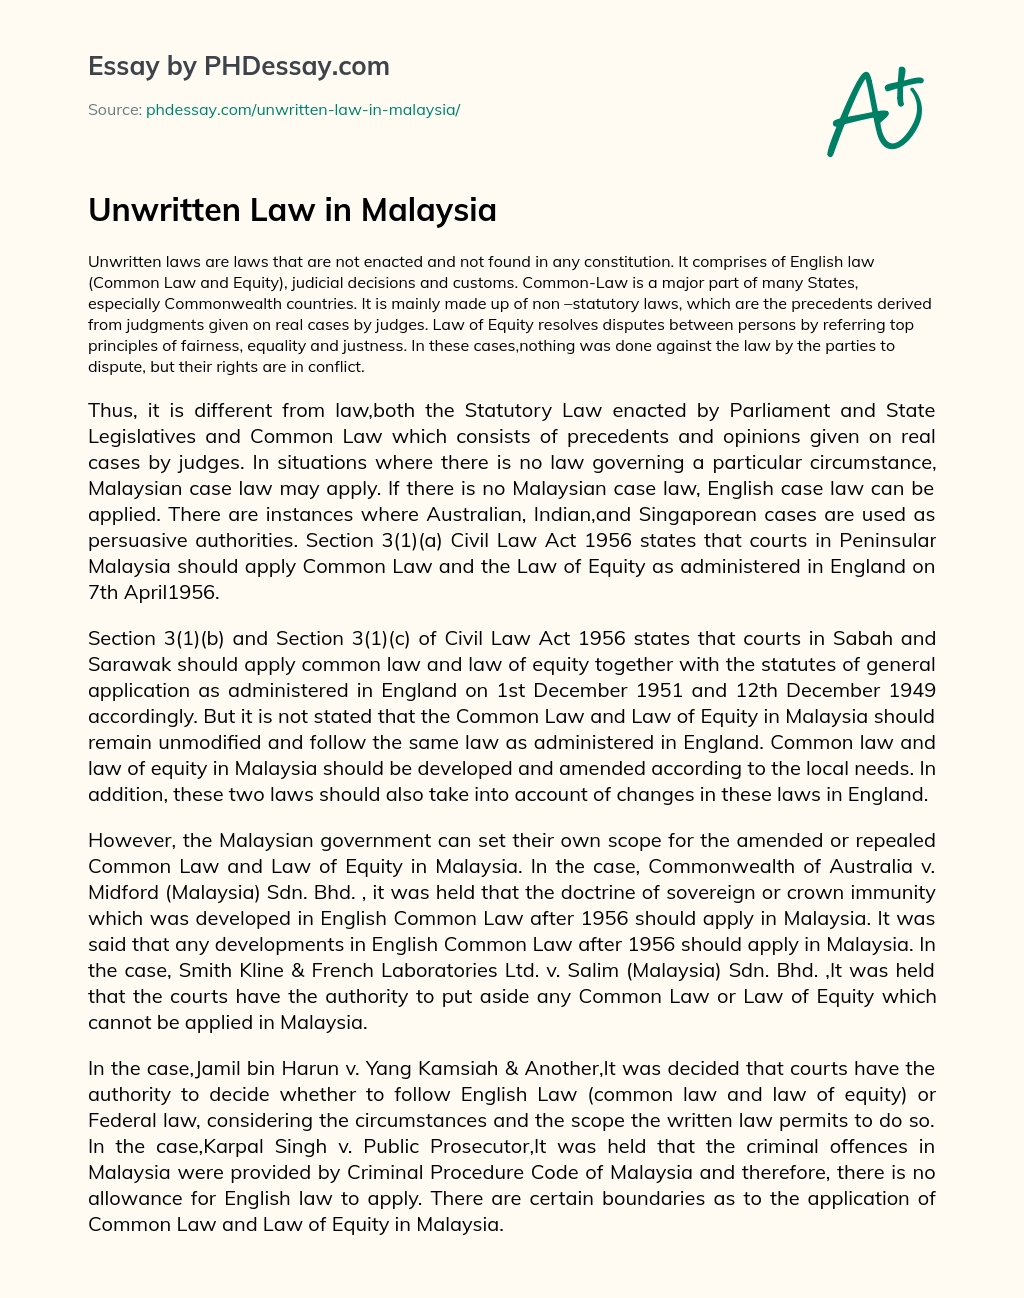 Unwritten Law in Malaysia essay